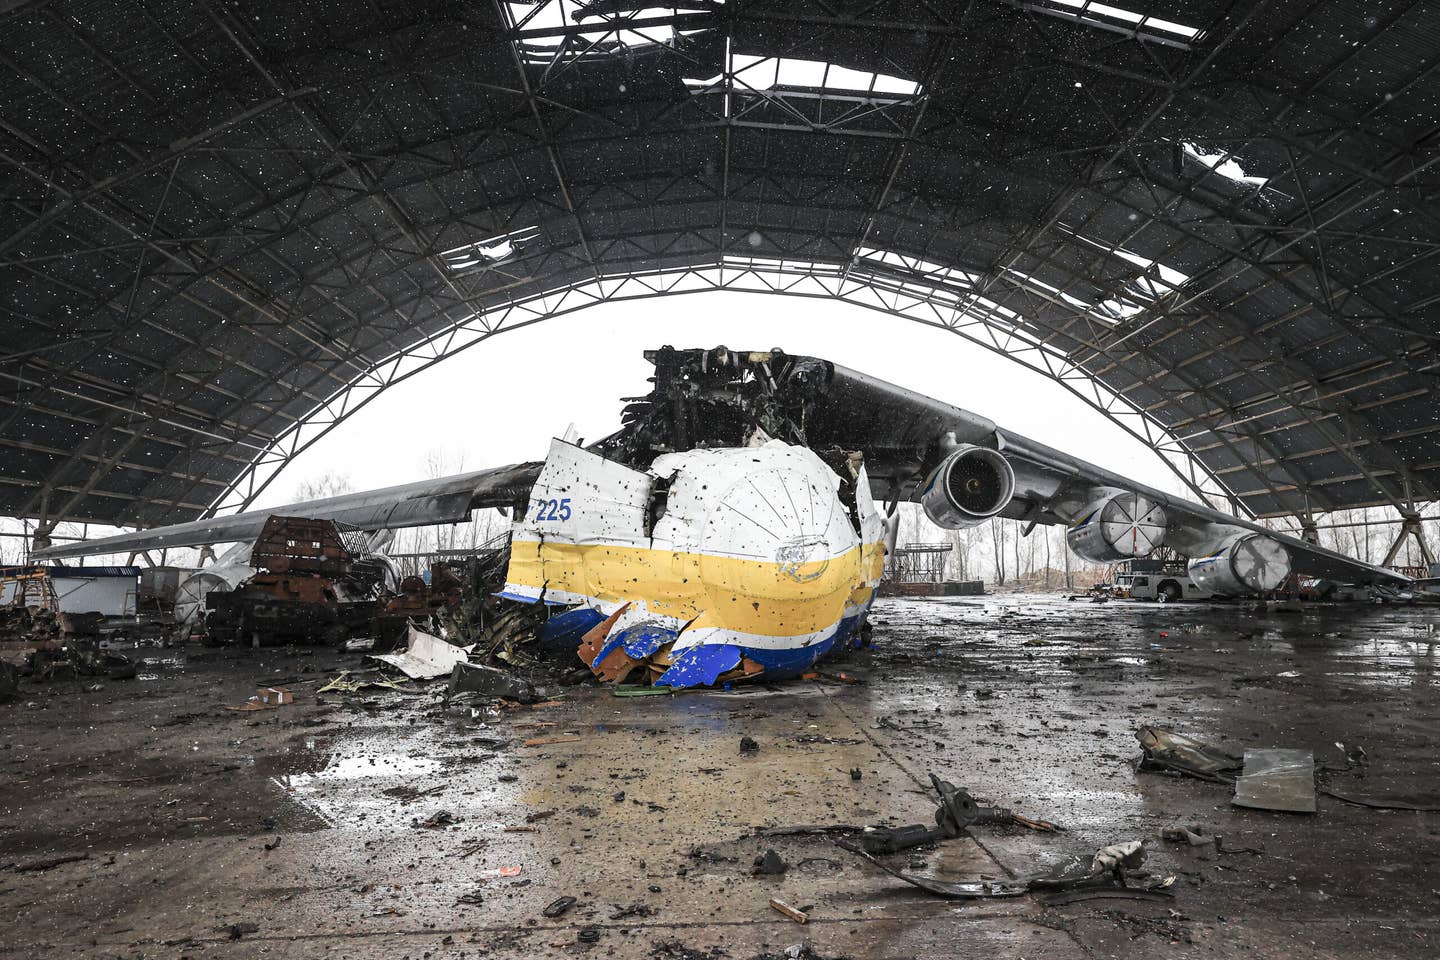 The wreckage of Antonov An-225 Mriya cargo plane, the world's biggest cargo jet. (Photo by Metin Aktas/Anadolu Agency via Getty Images)